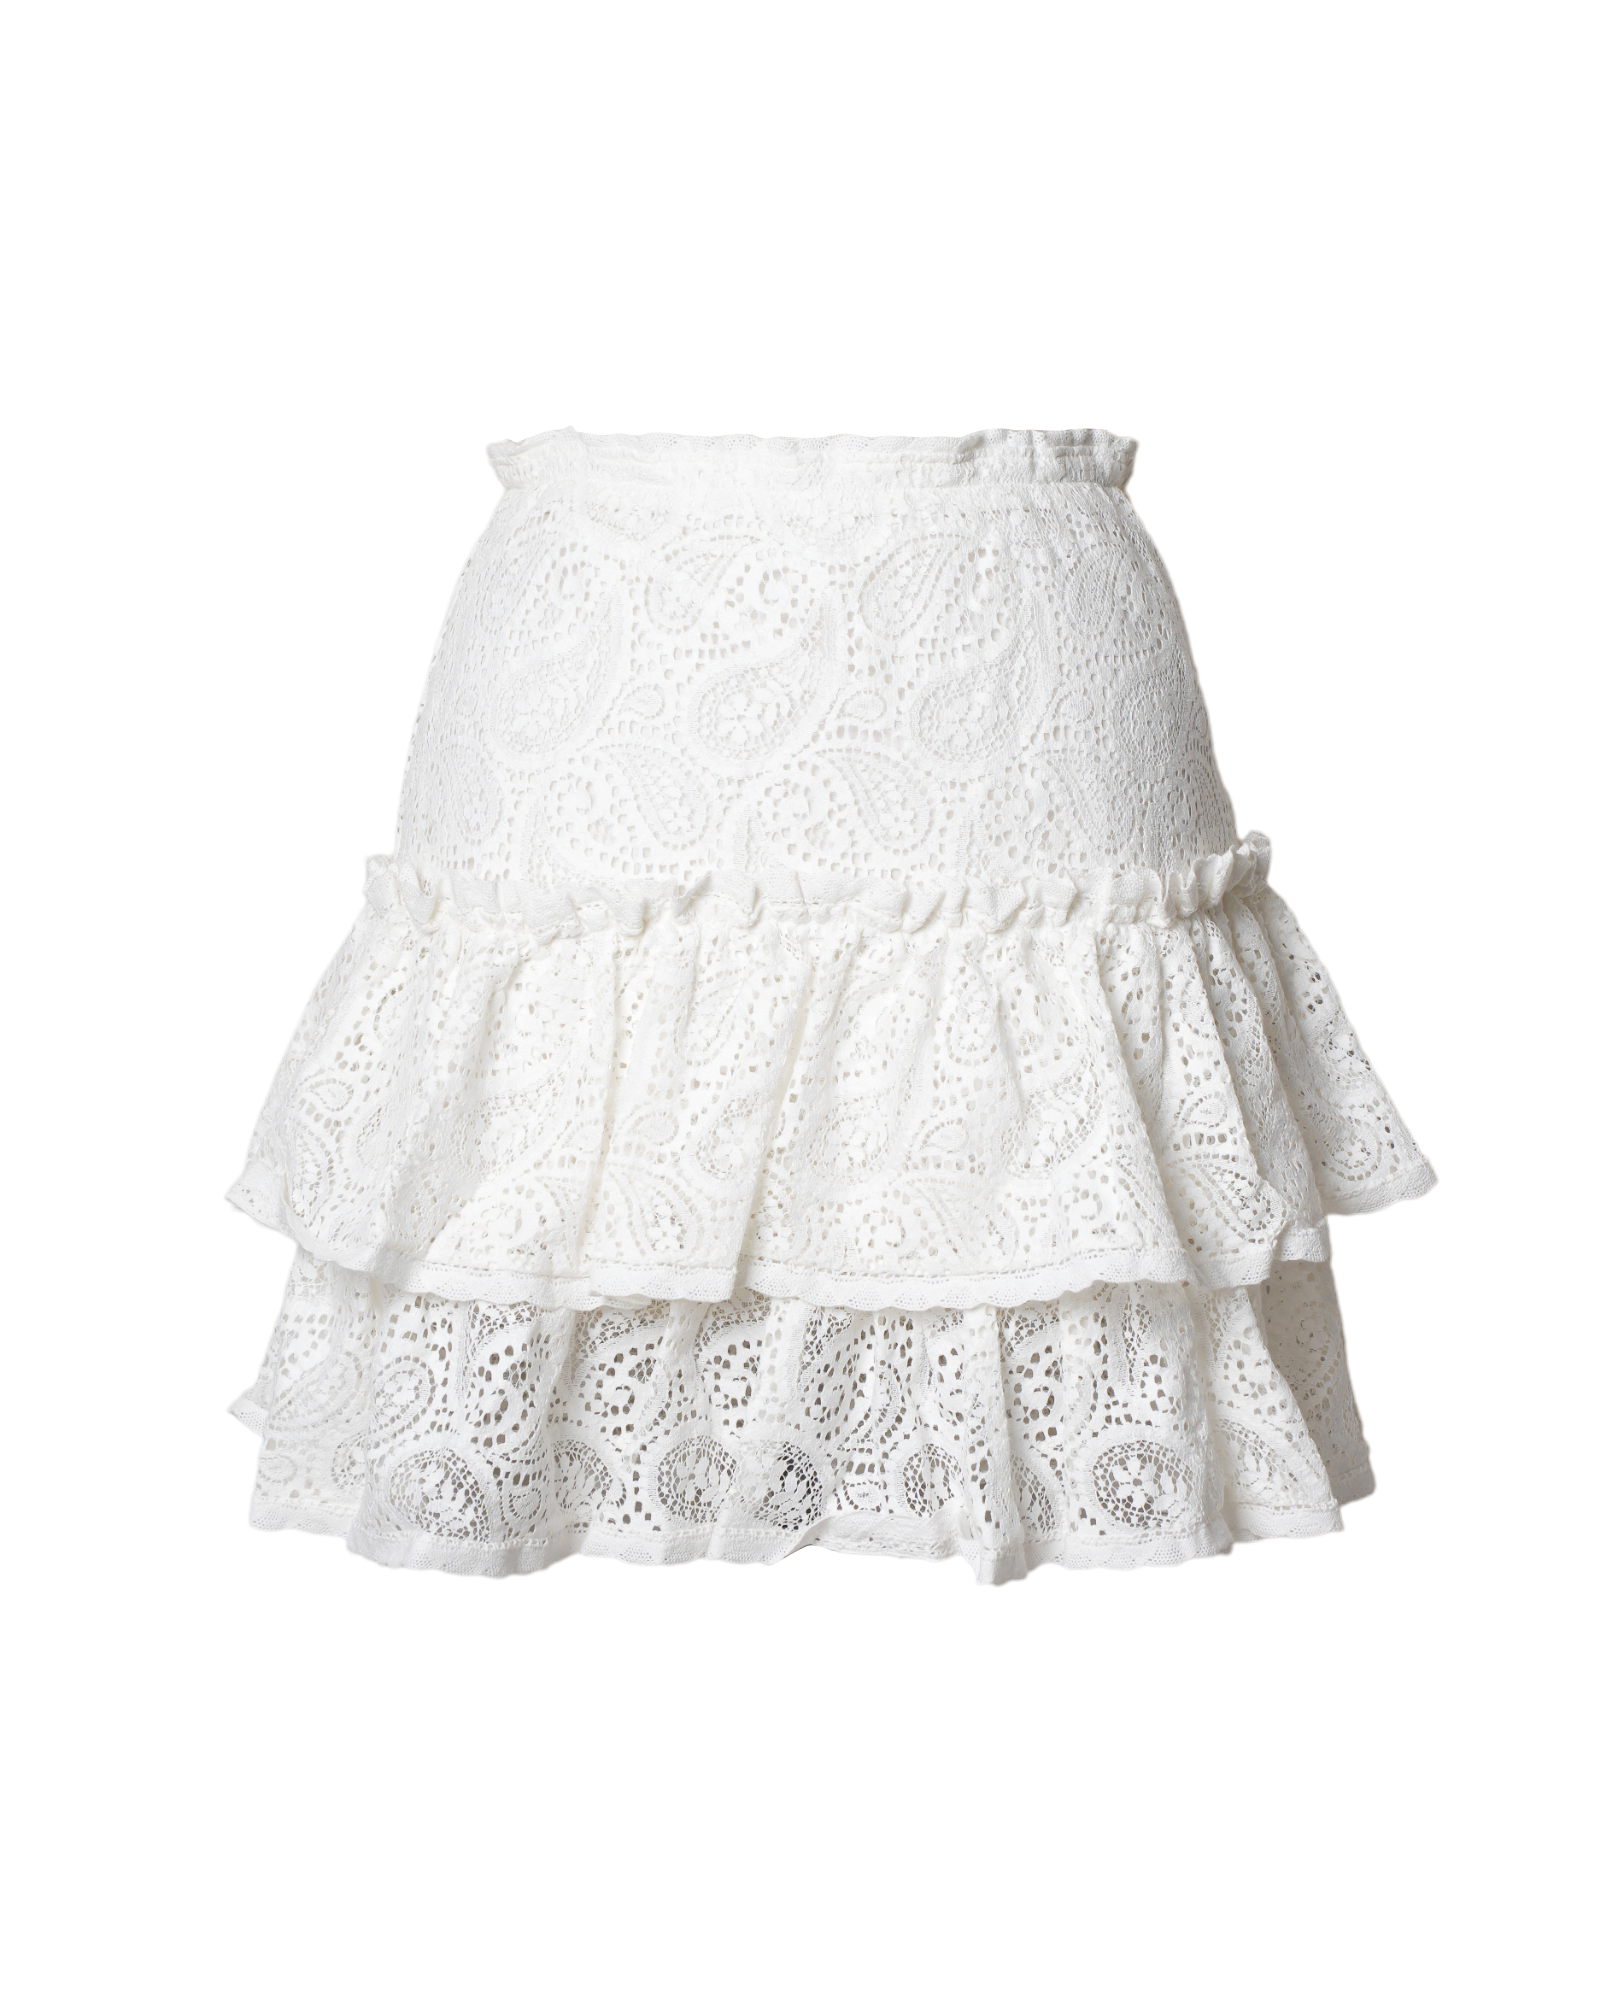 New Robert Graham White Lace Skirt